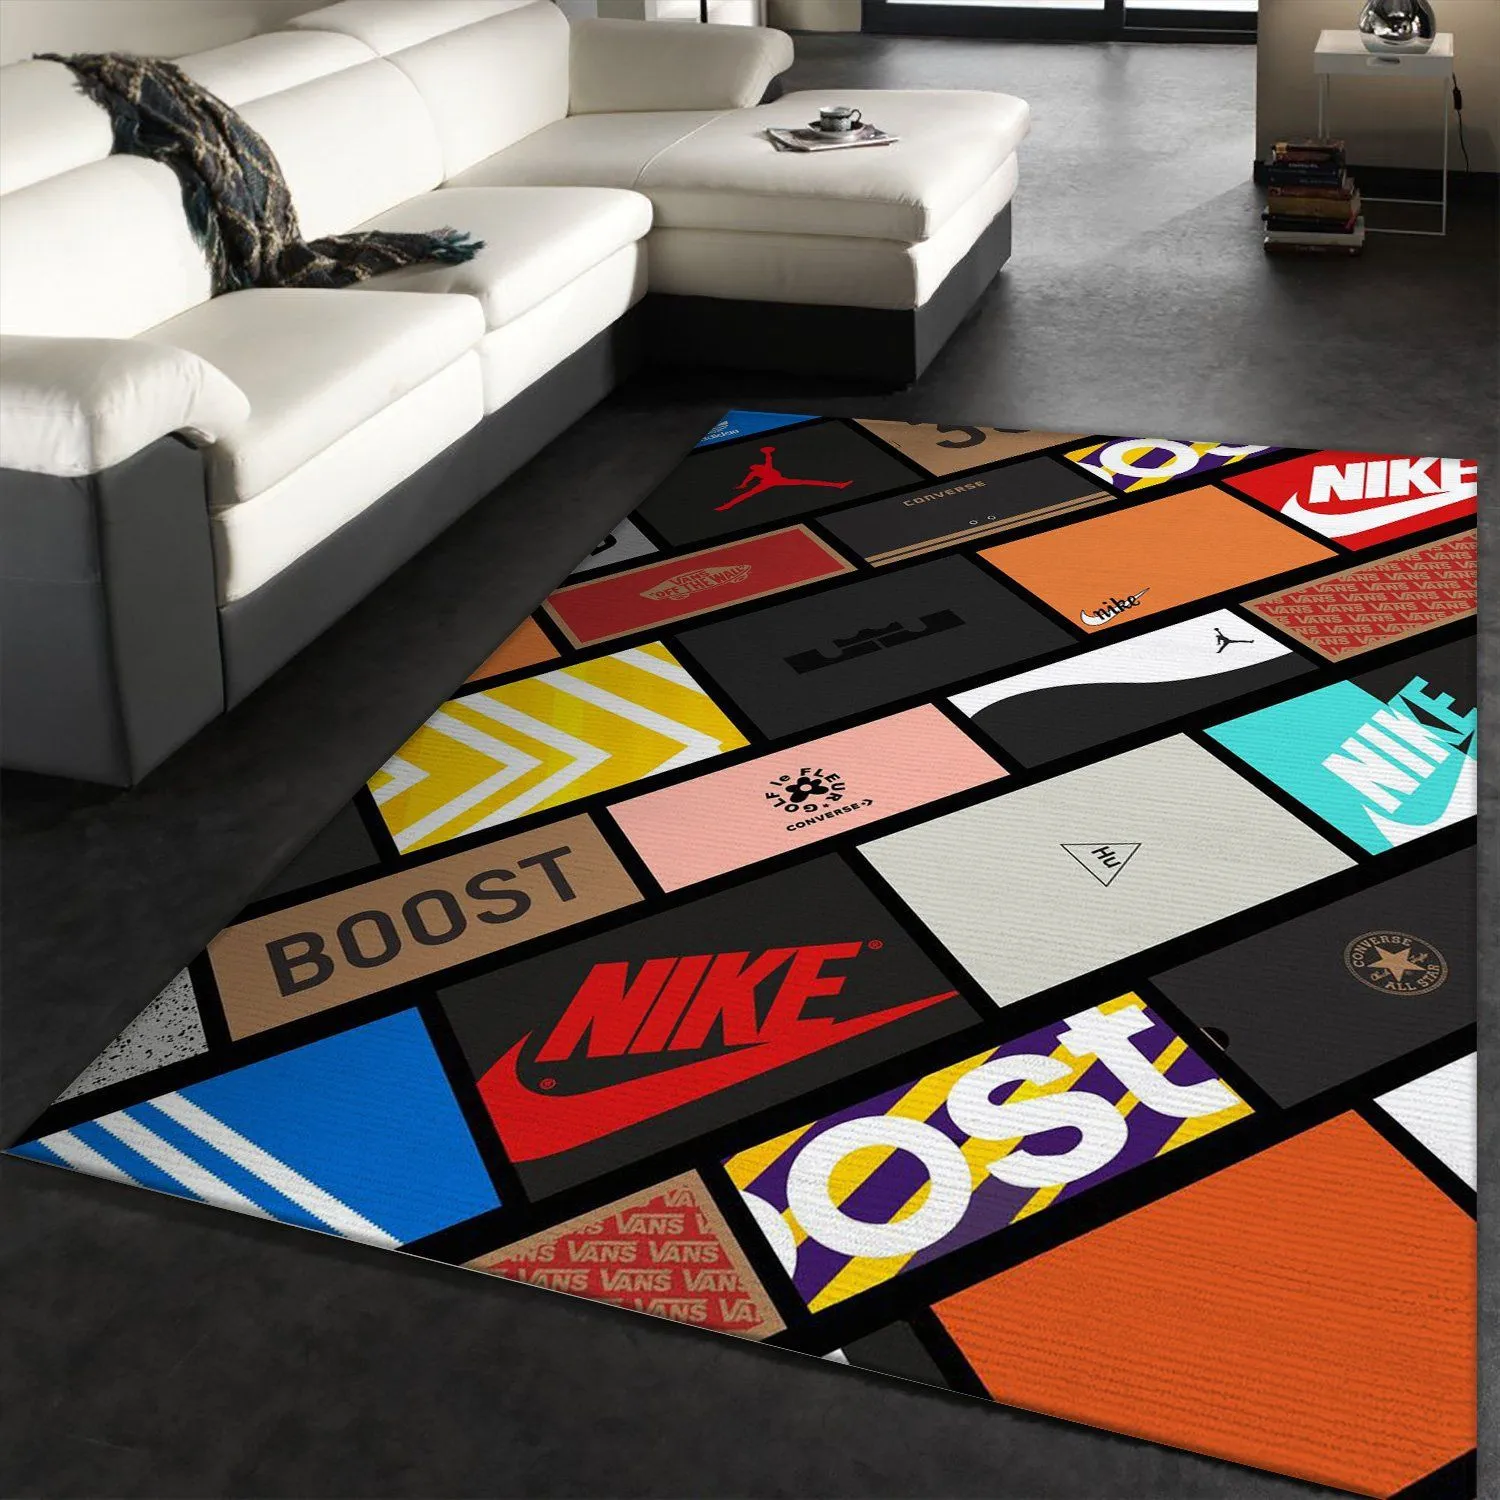 Sneaker box Rectangle Rug Door Mat Area Carpet Luxury Home Decor Fashion Brand